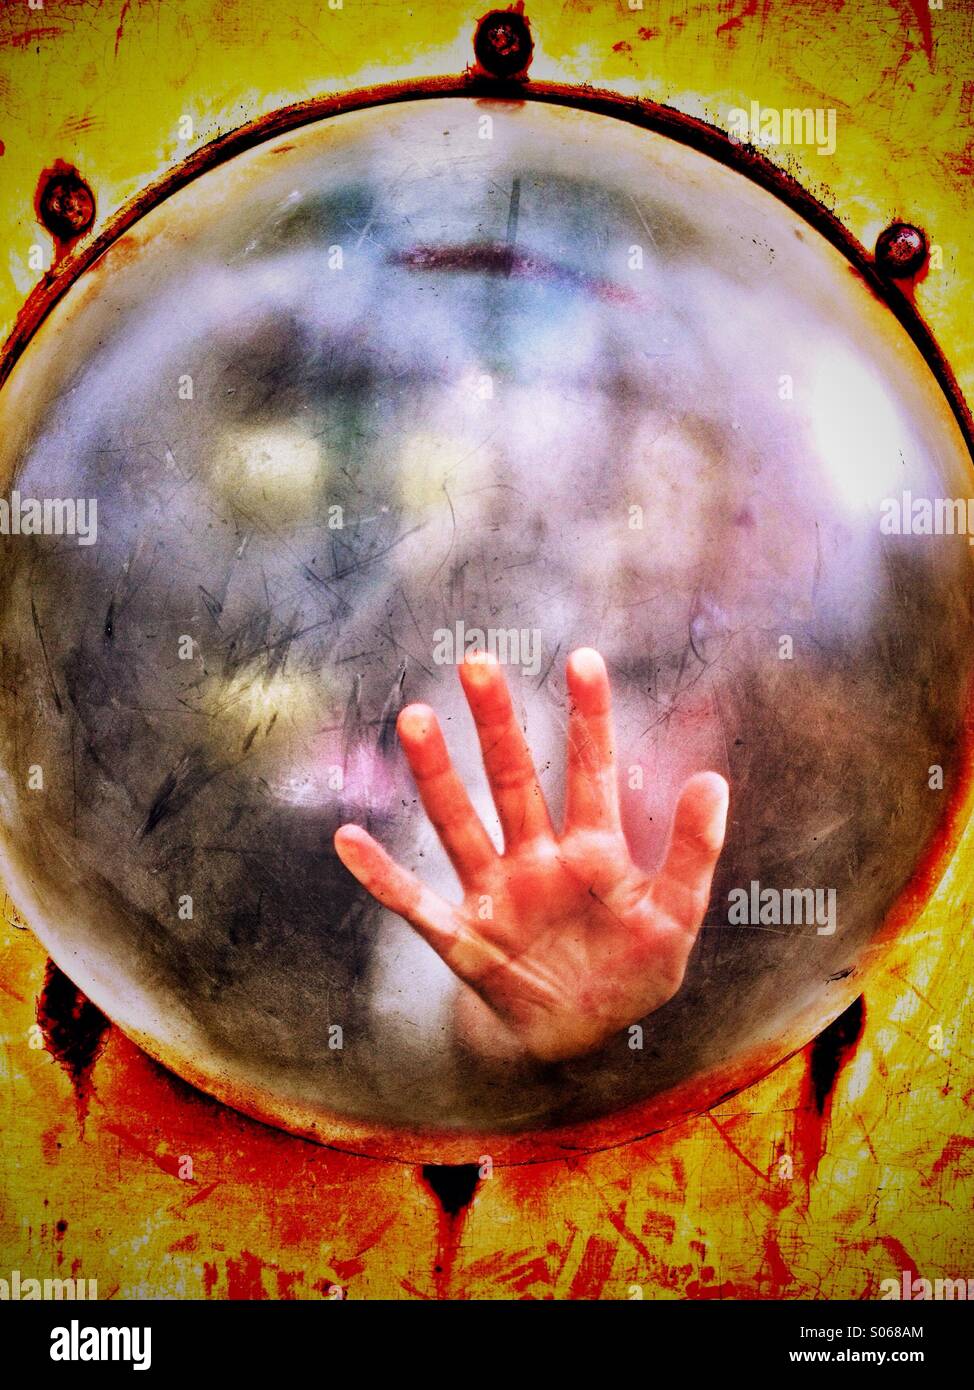 Child's hand on plastic bubble Stock Photo